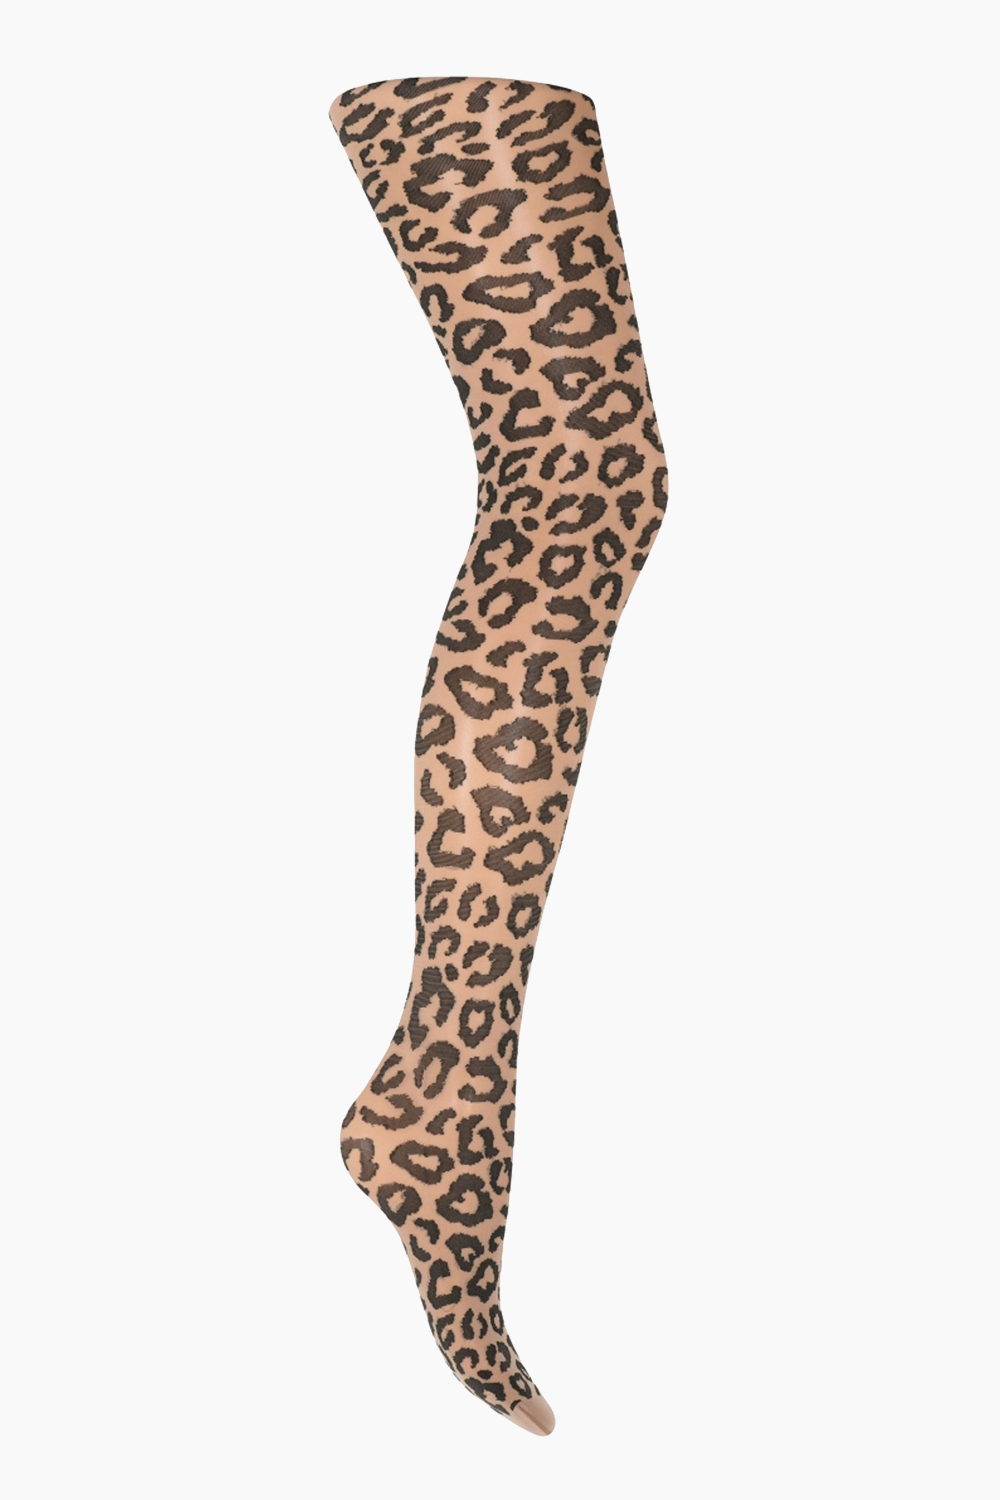 Leopard Pantyhose - Cocoa Creme - Sneaky Fox